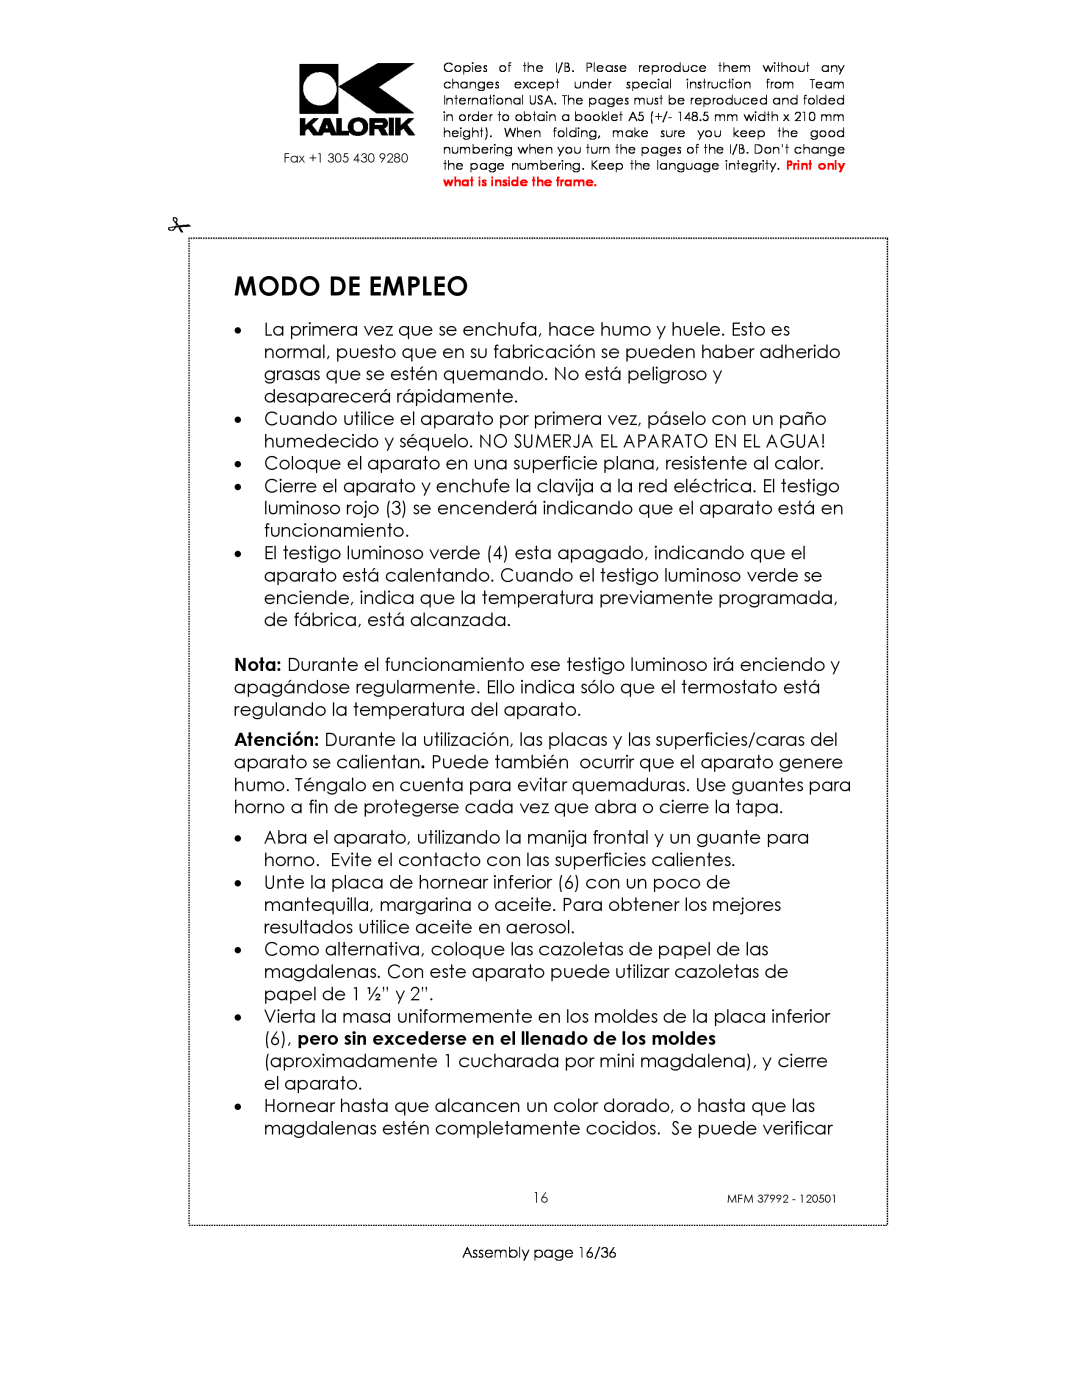 Kalorik MFM 37992 manual Modo De Empleo, Assembly page 16/36 